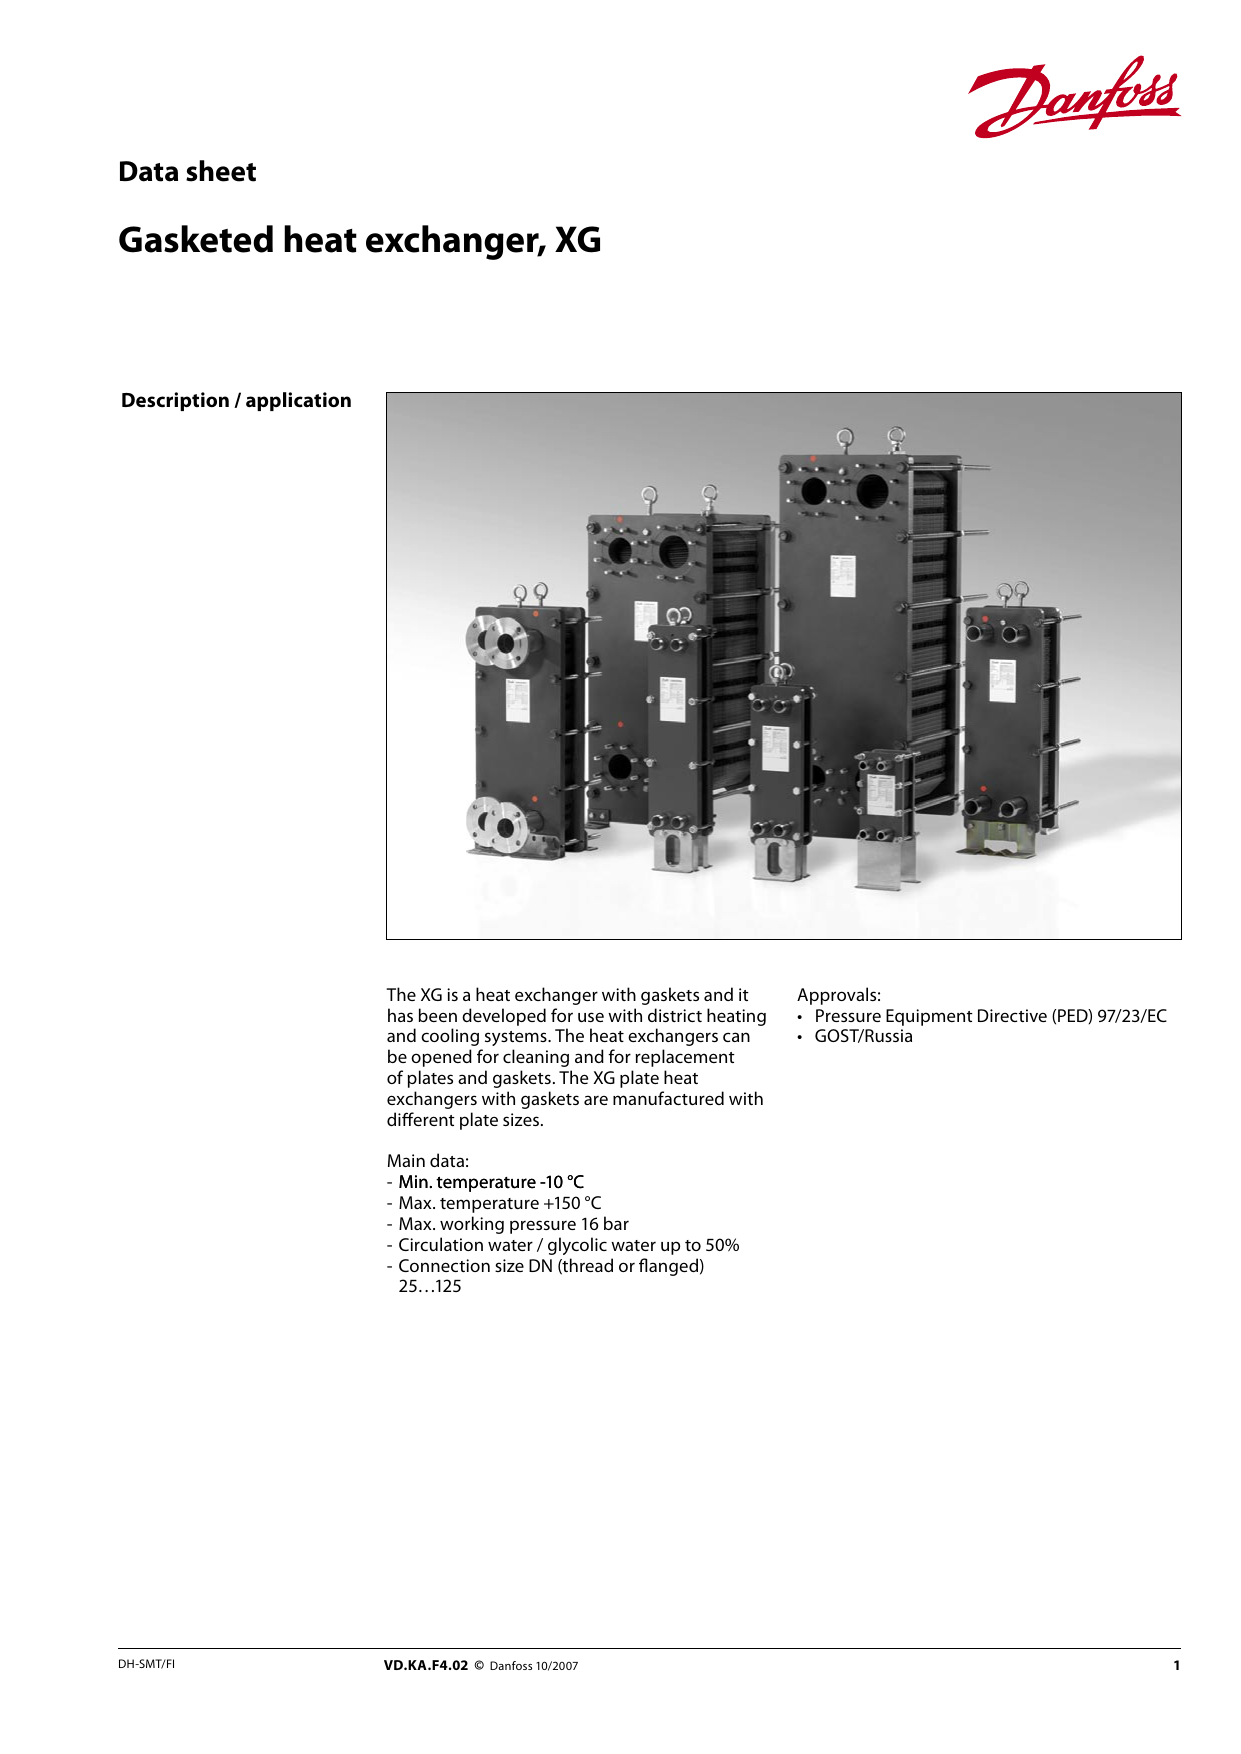 Danfoss Xg Gasketed Heat Exchanger Datasheet Manualzz